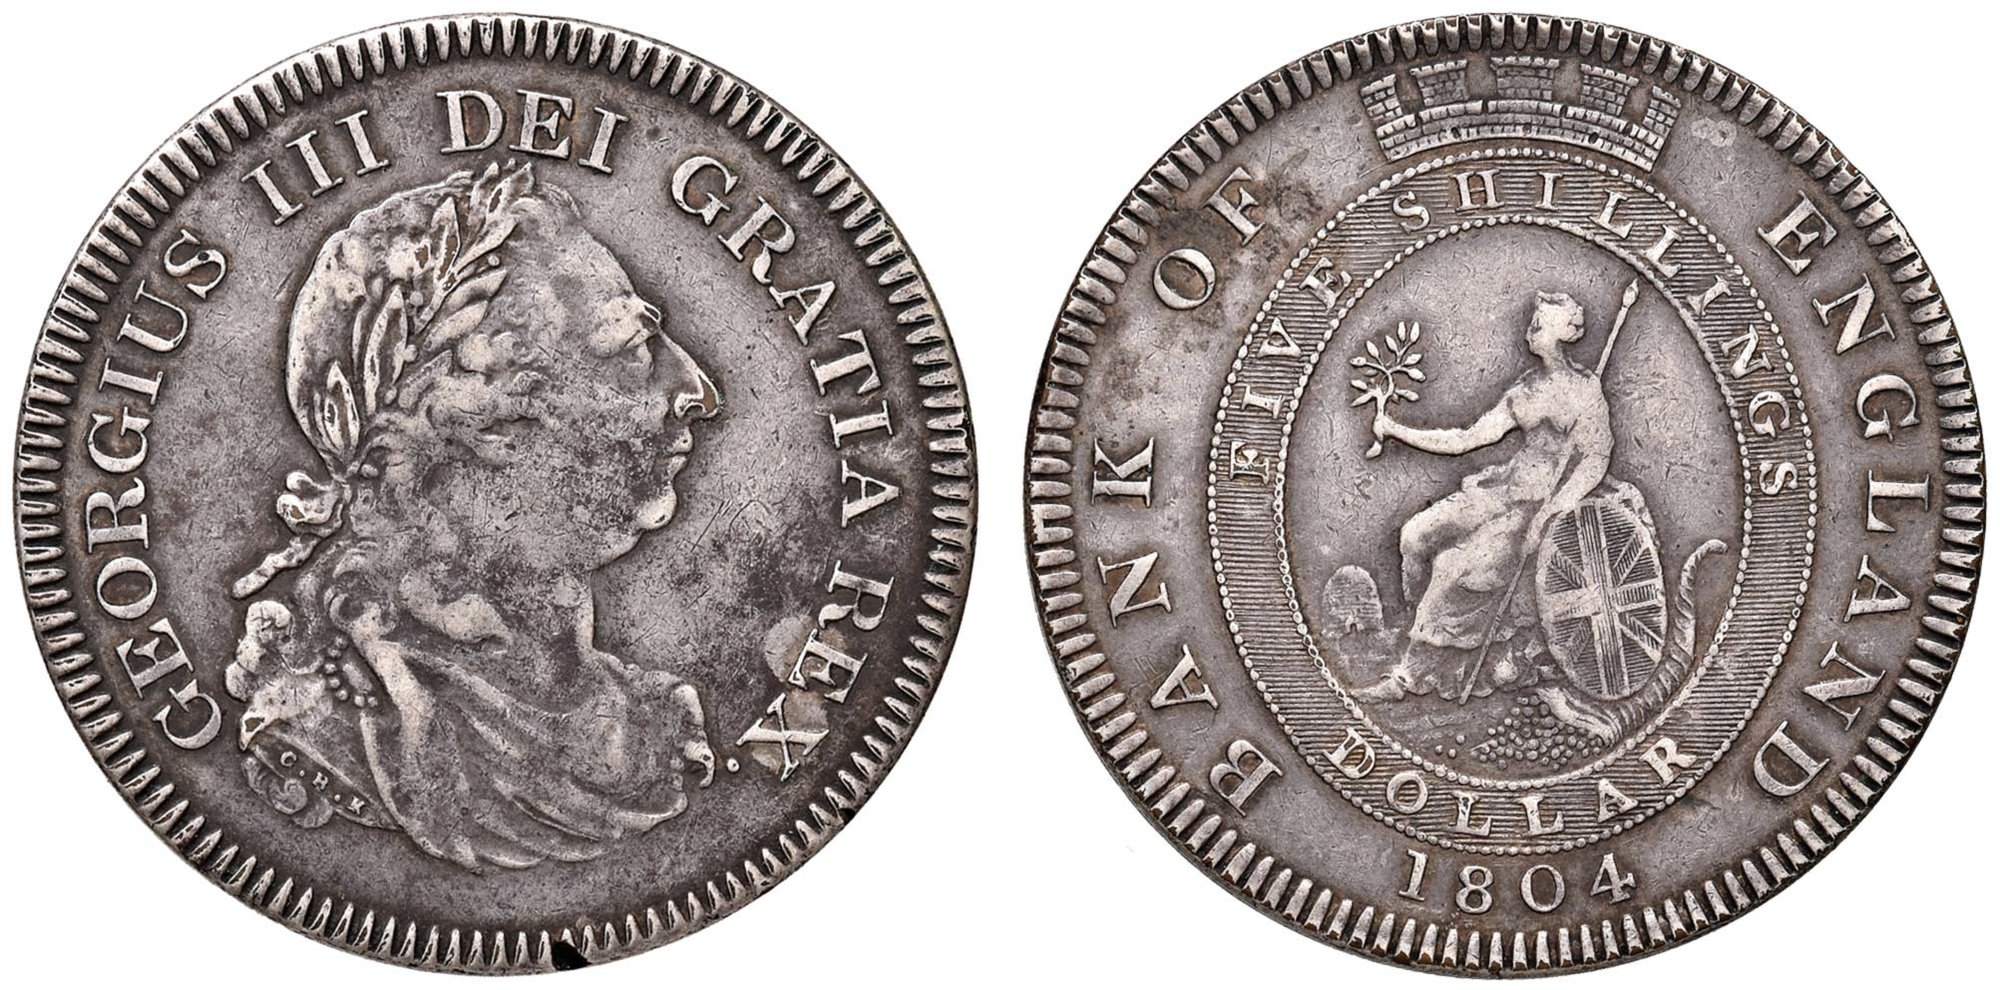 1804 Britannia Silver coin